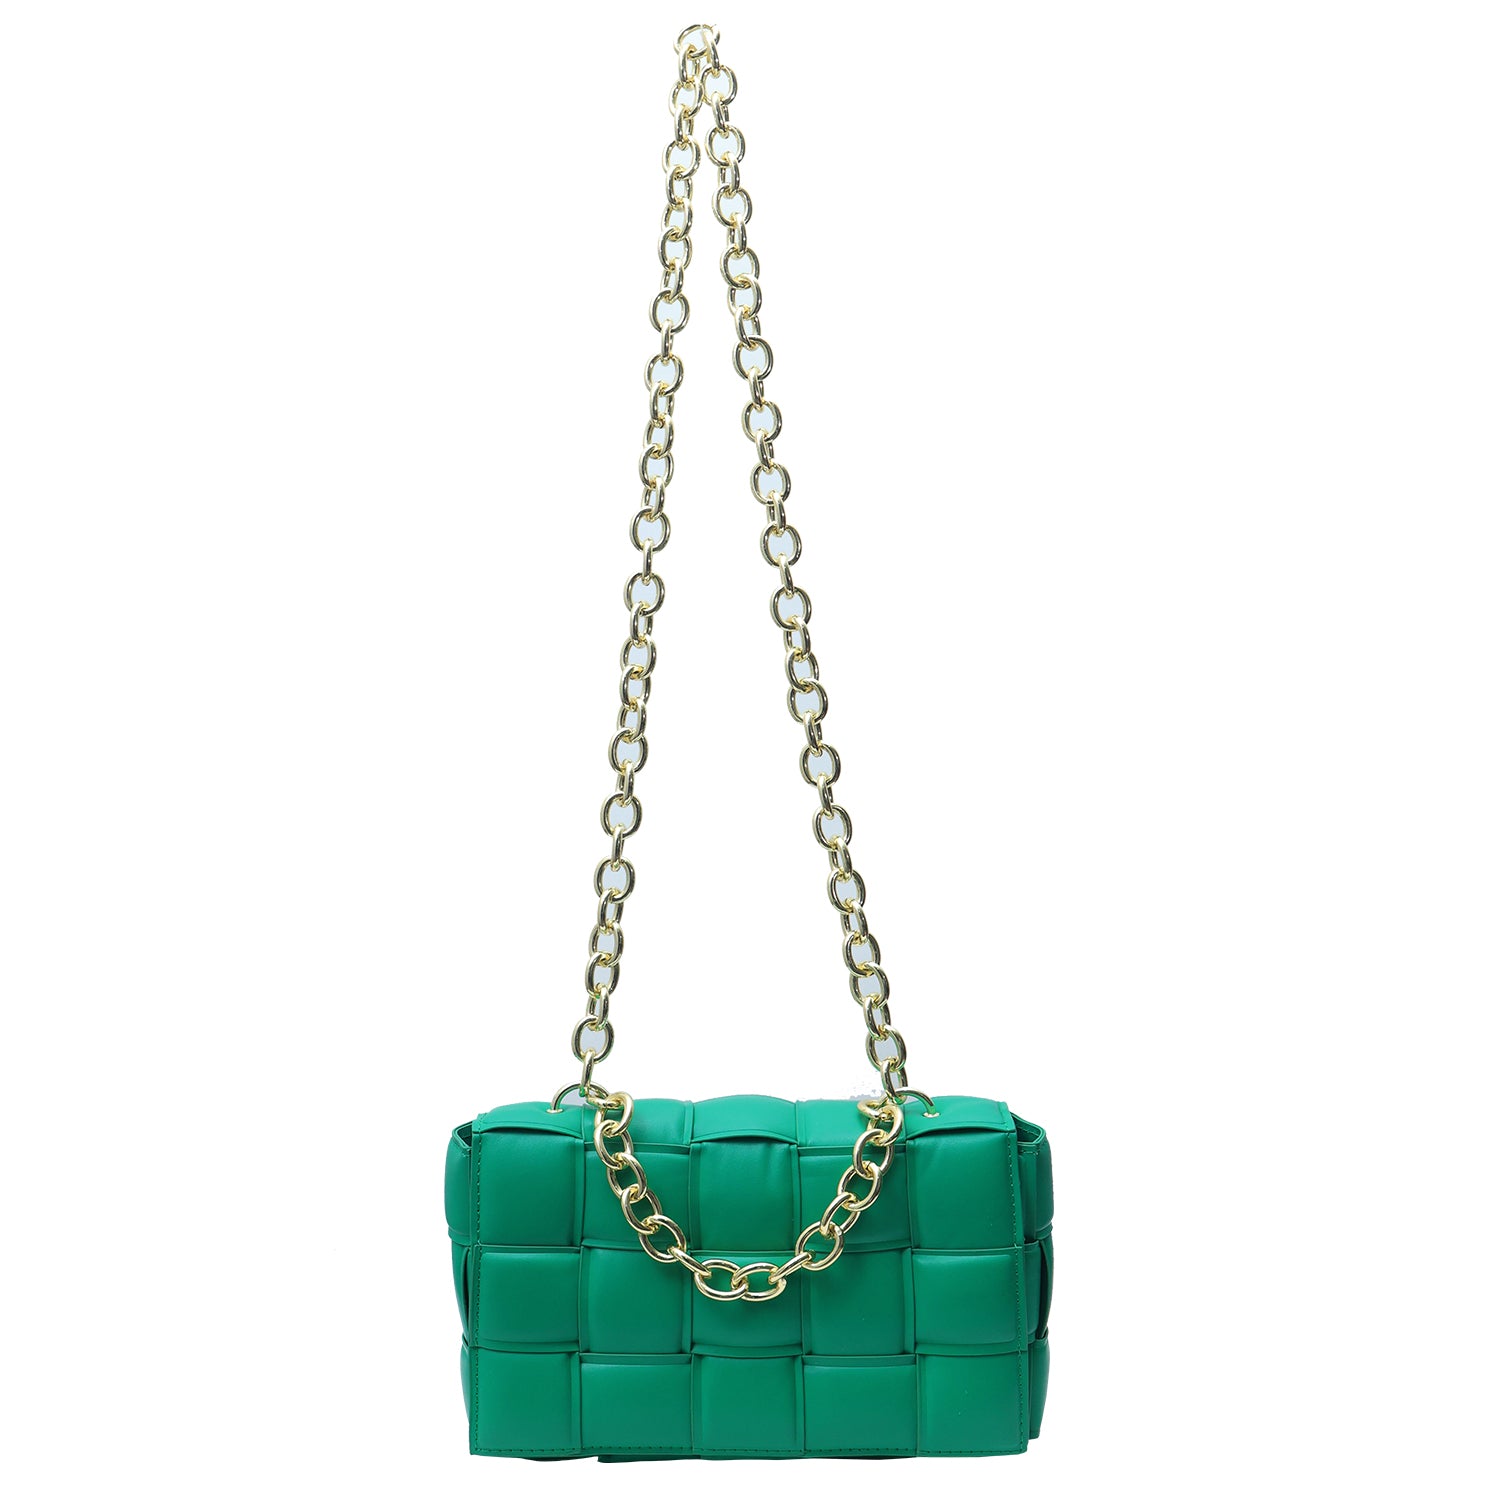 Green Sling Bag with Elegant Chain for Girls